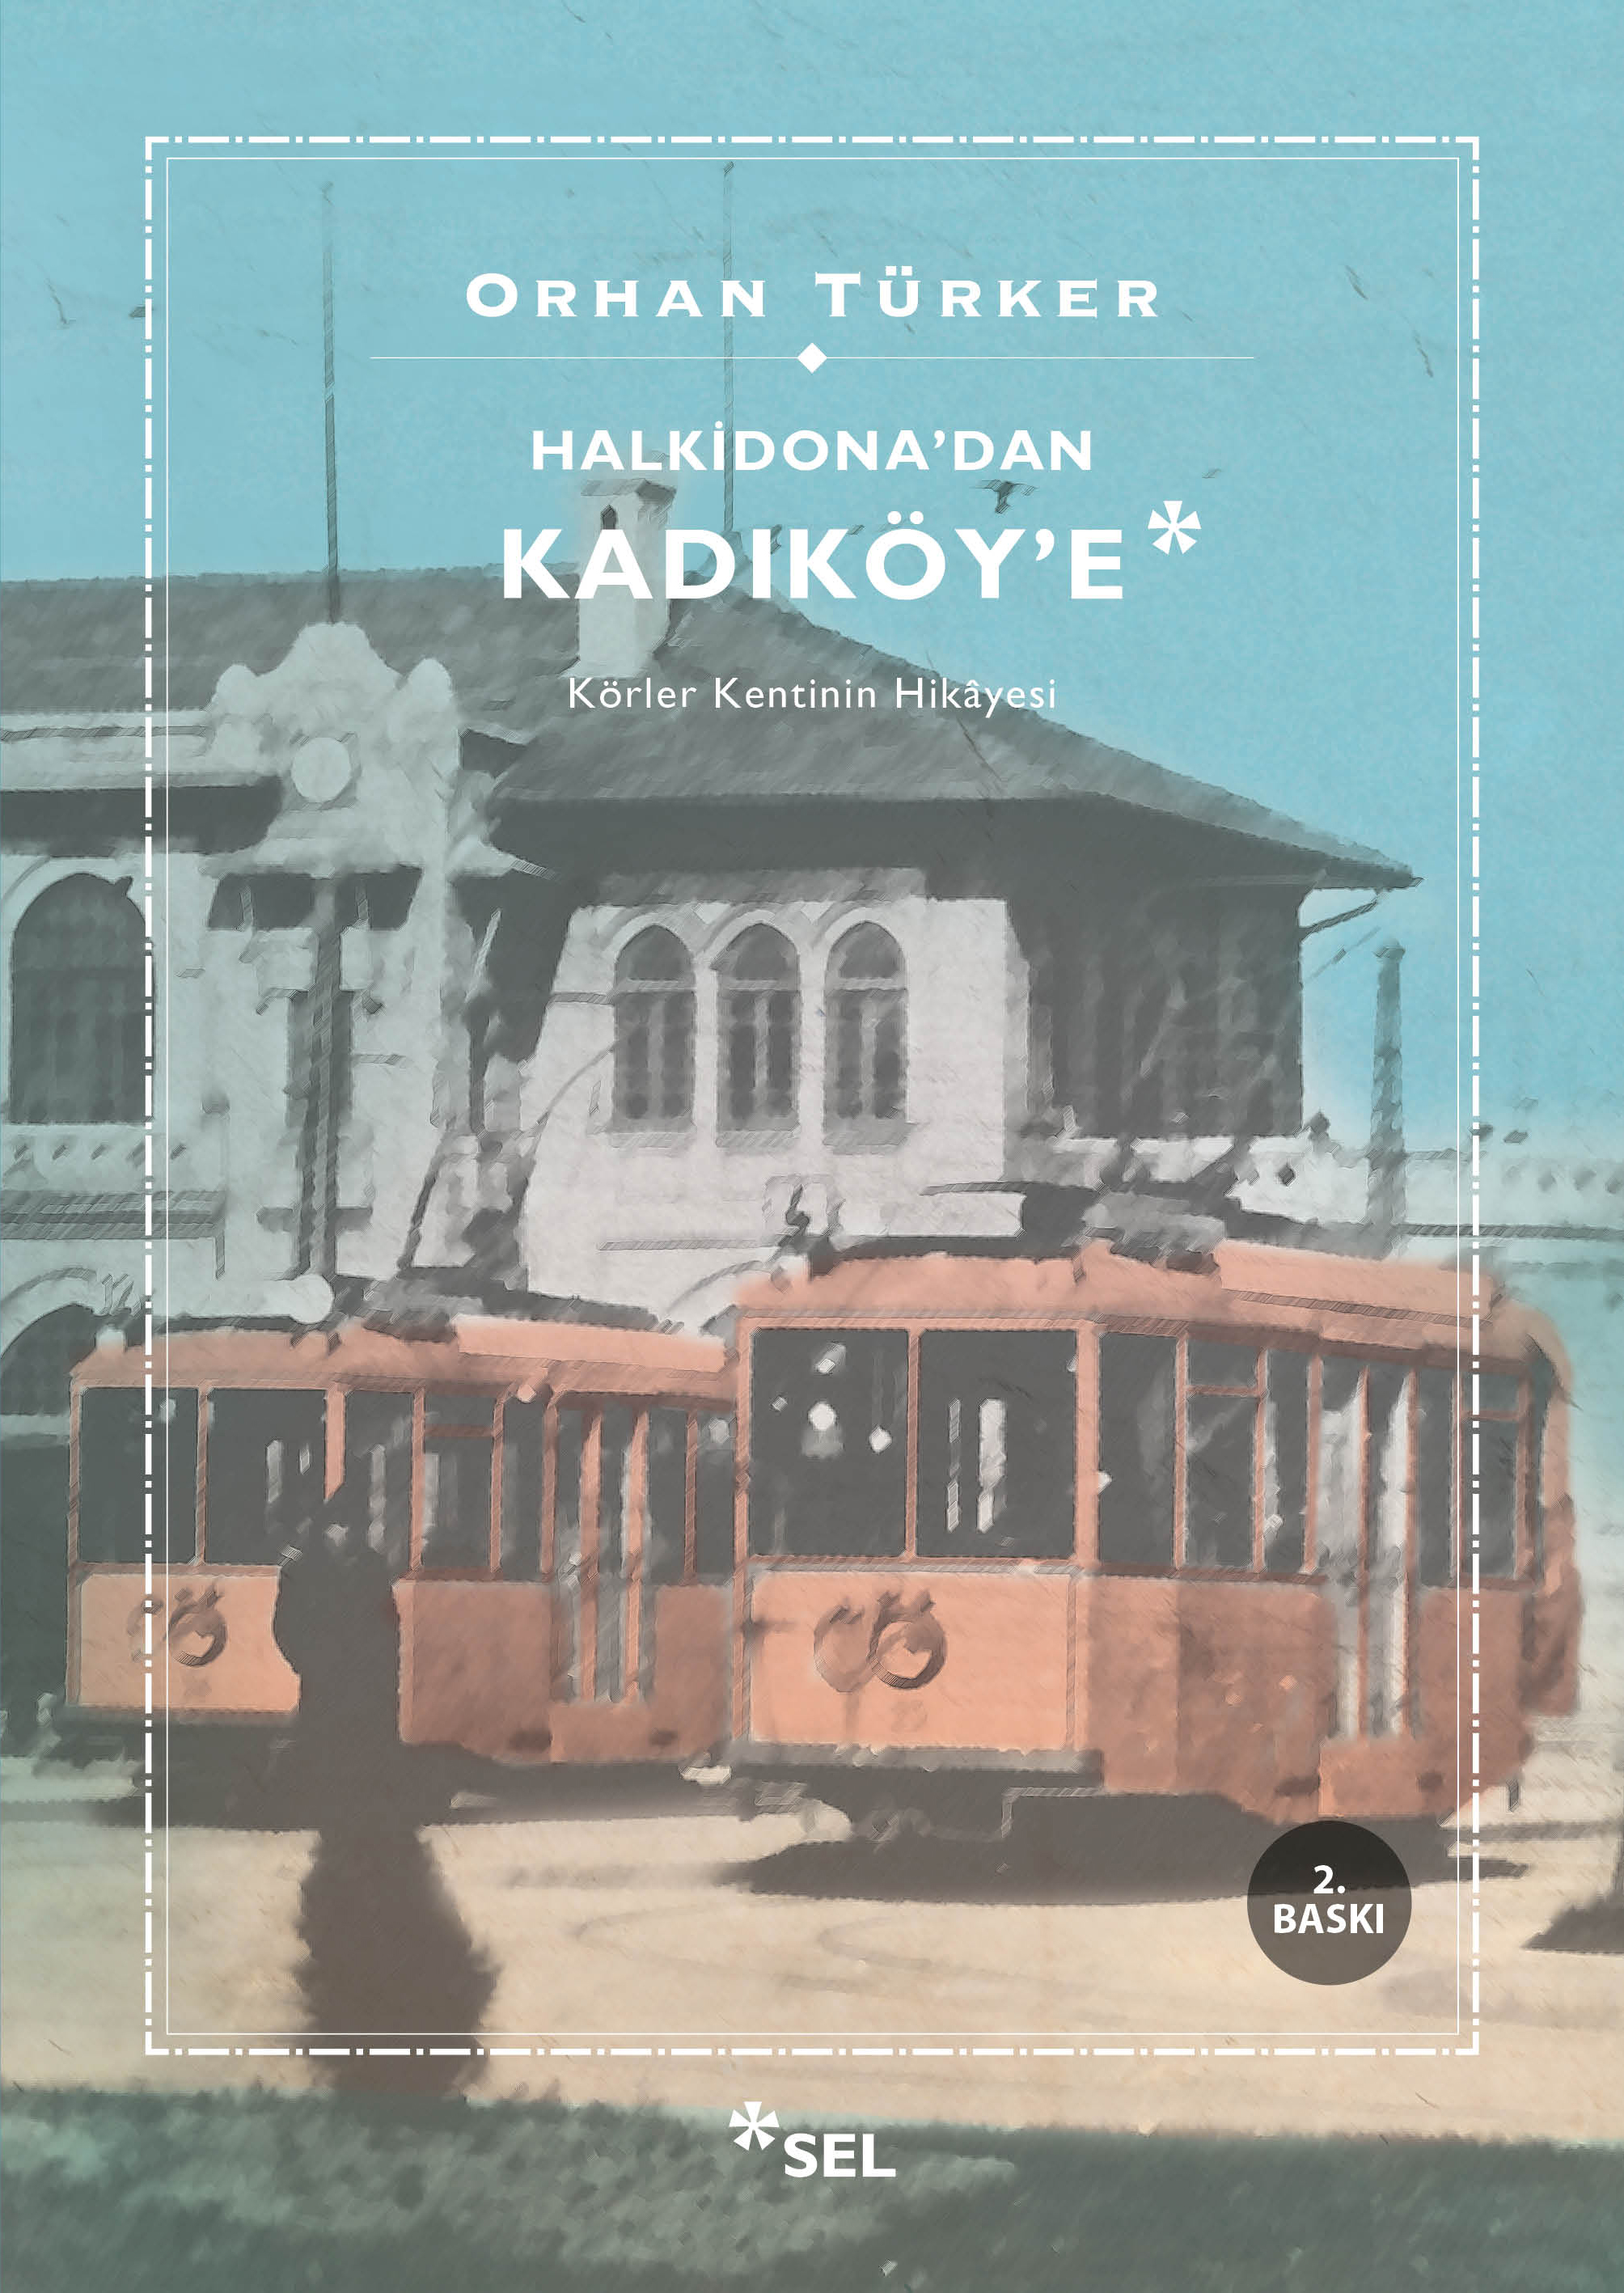 Halkidona'dan Kadky'e